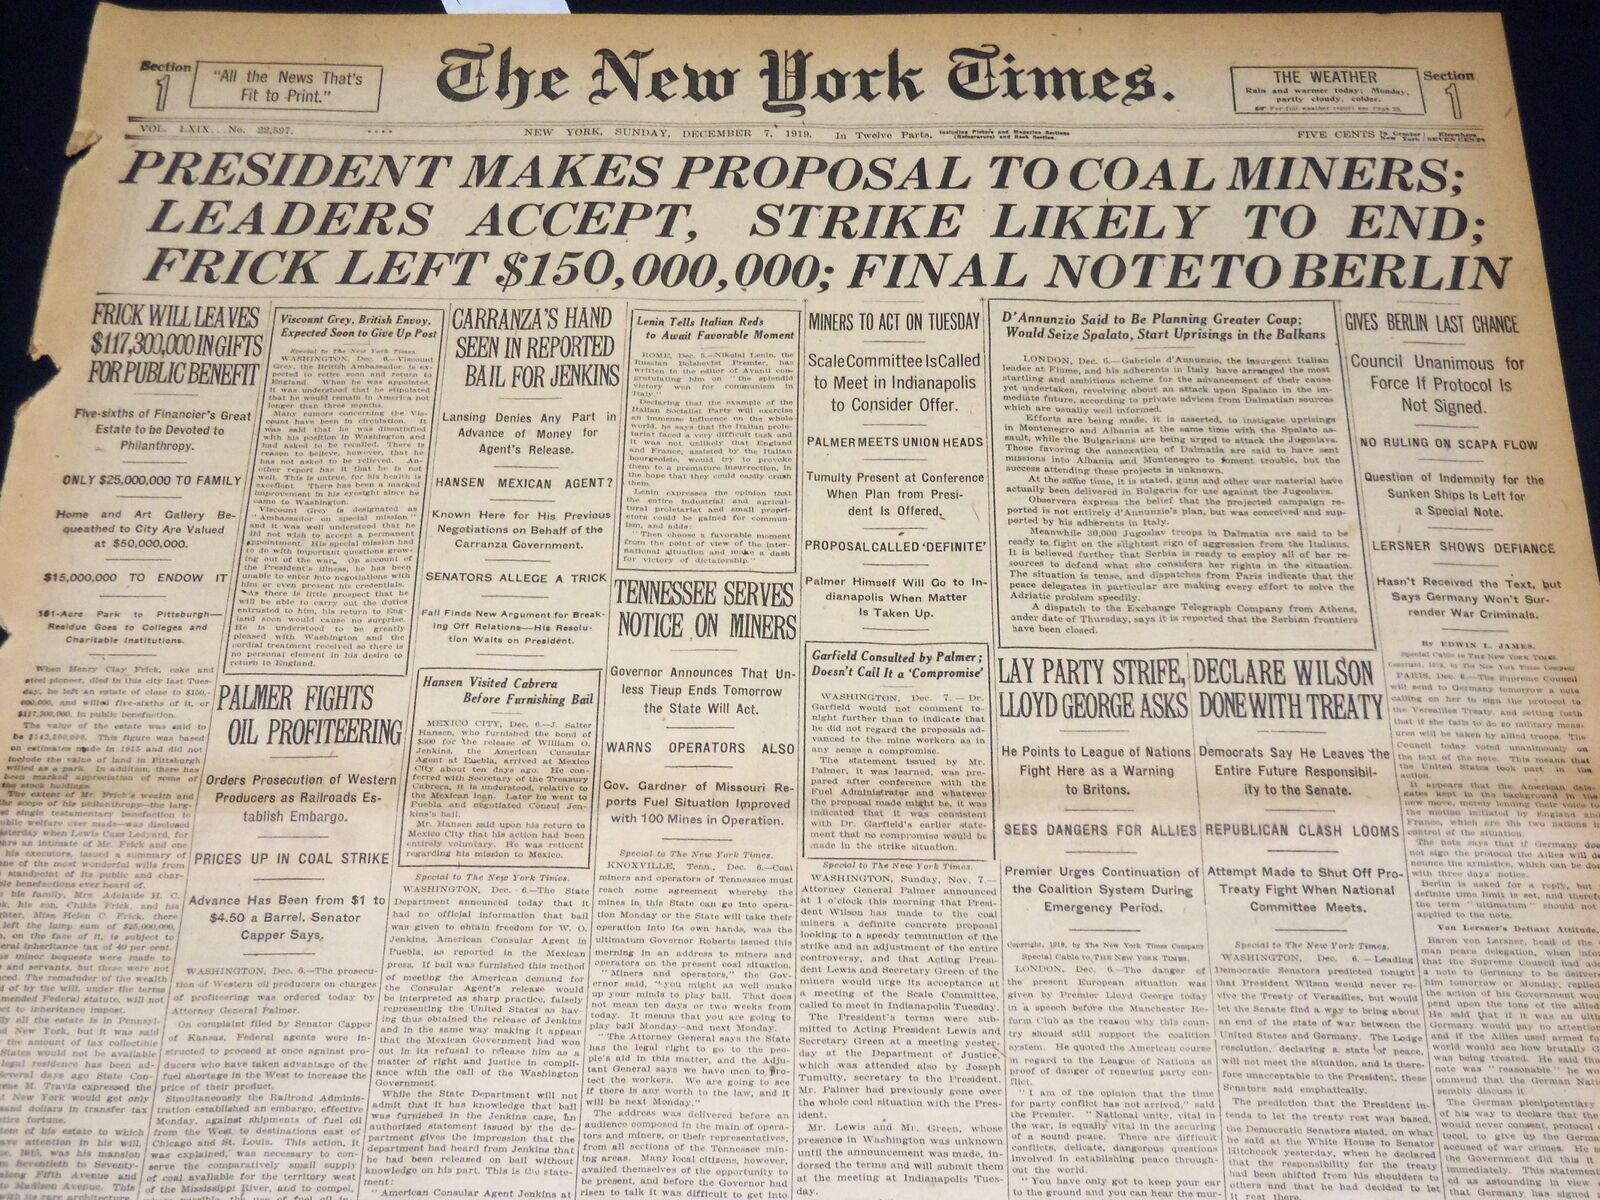 1919 DECEMBER 7 NEW YORK TIMES NEWSPAPER - FRICK LEFT $150,000,000 - NT 7948